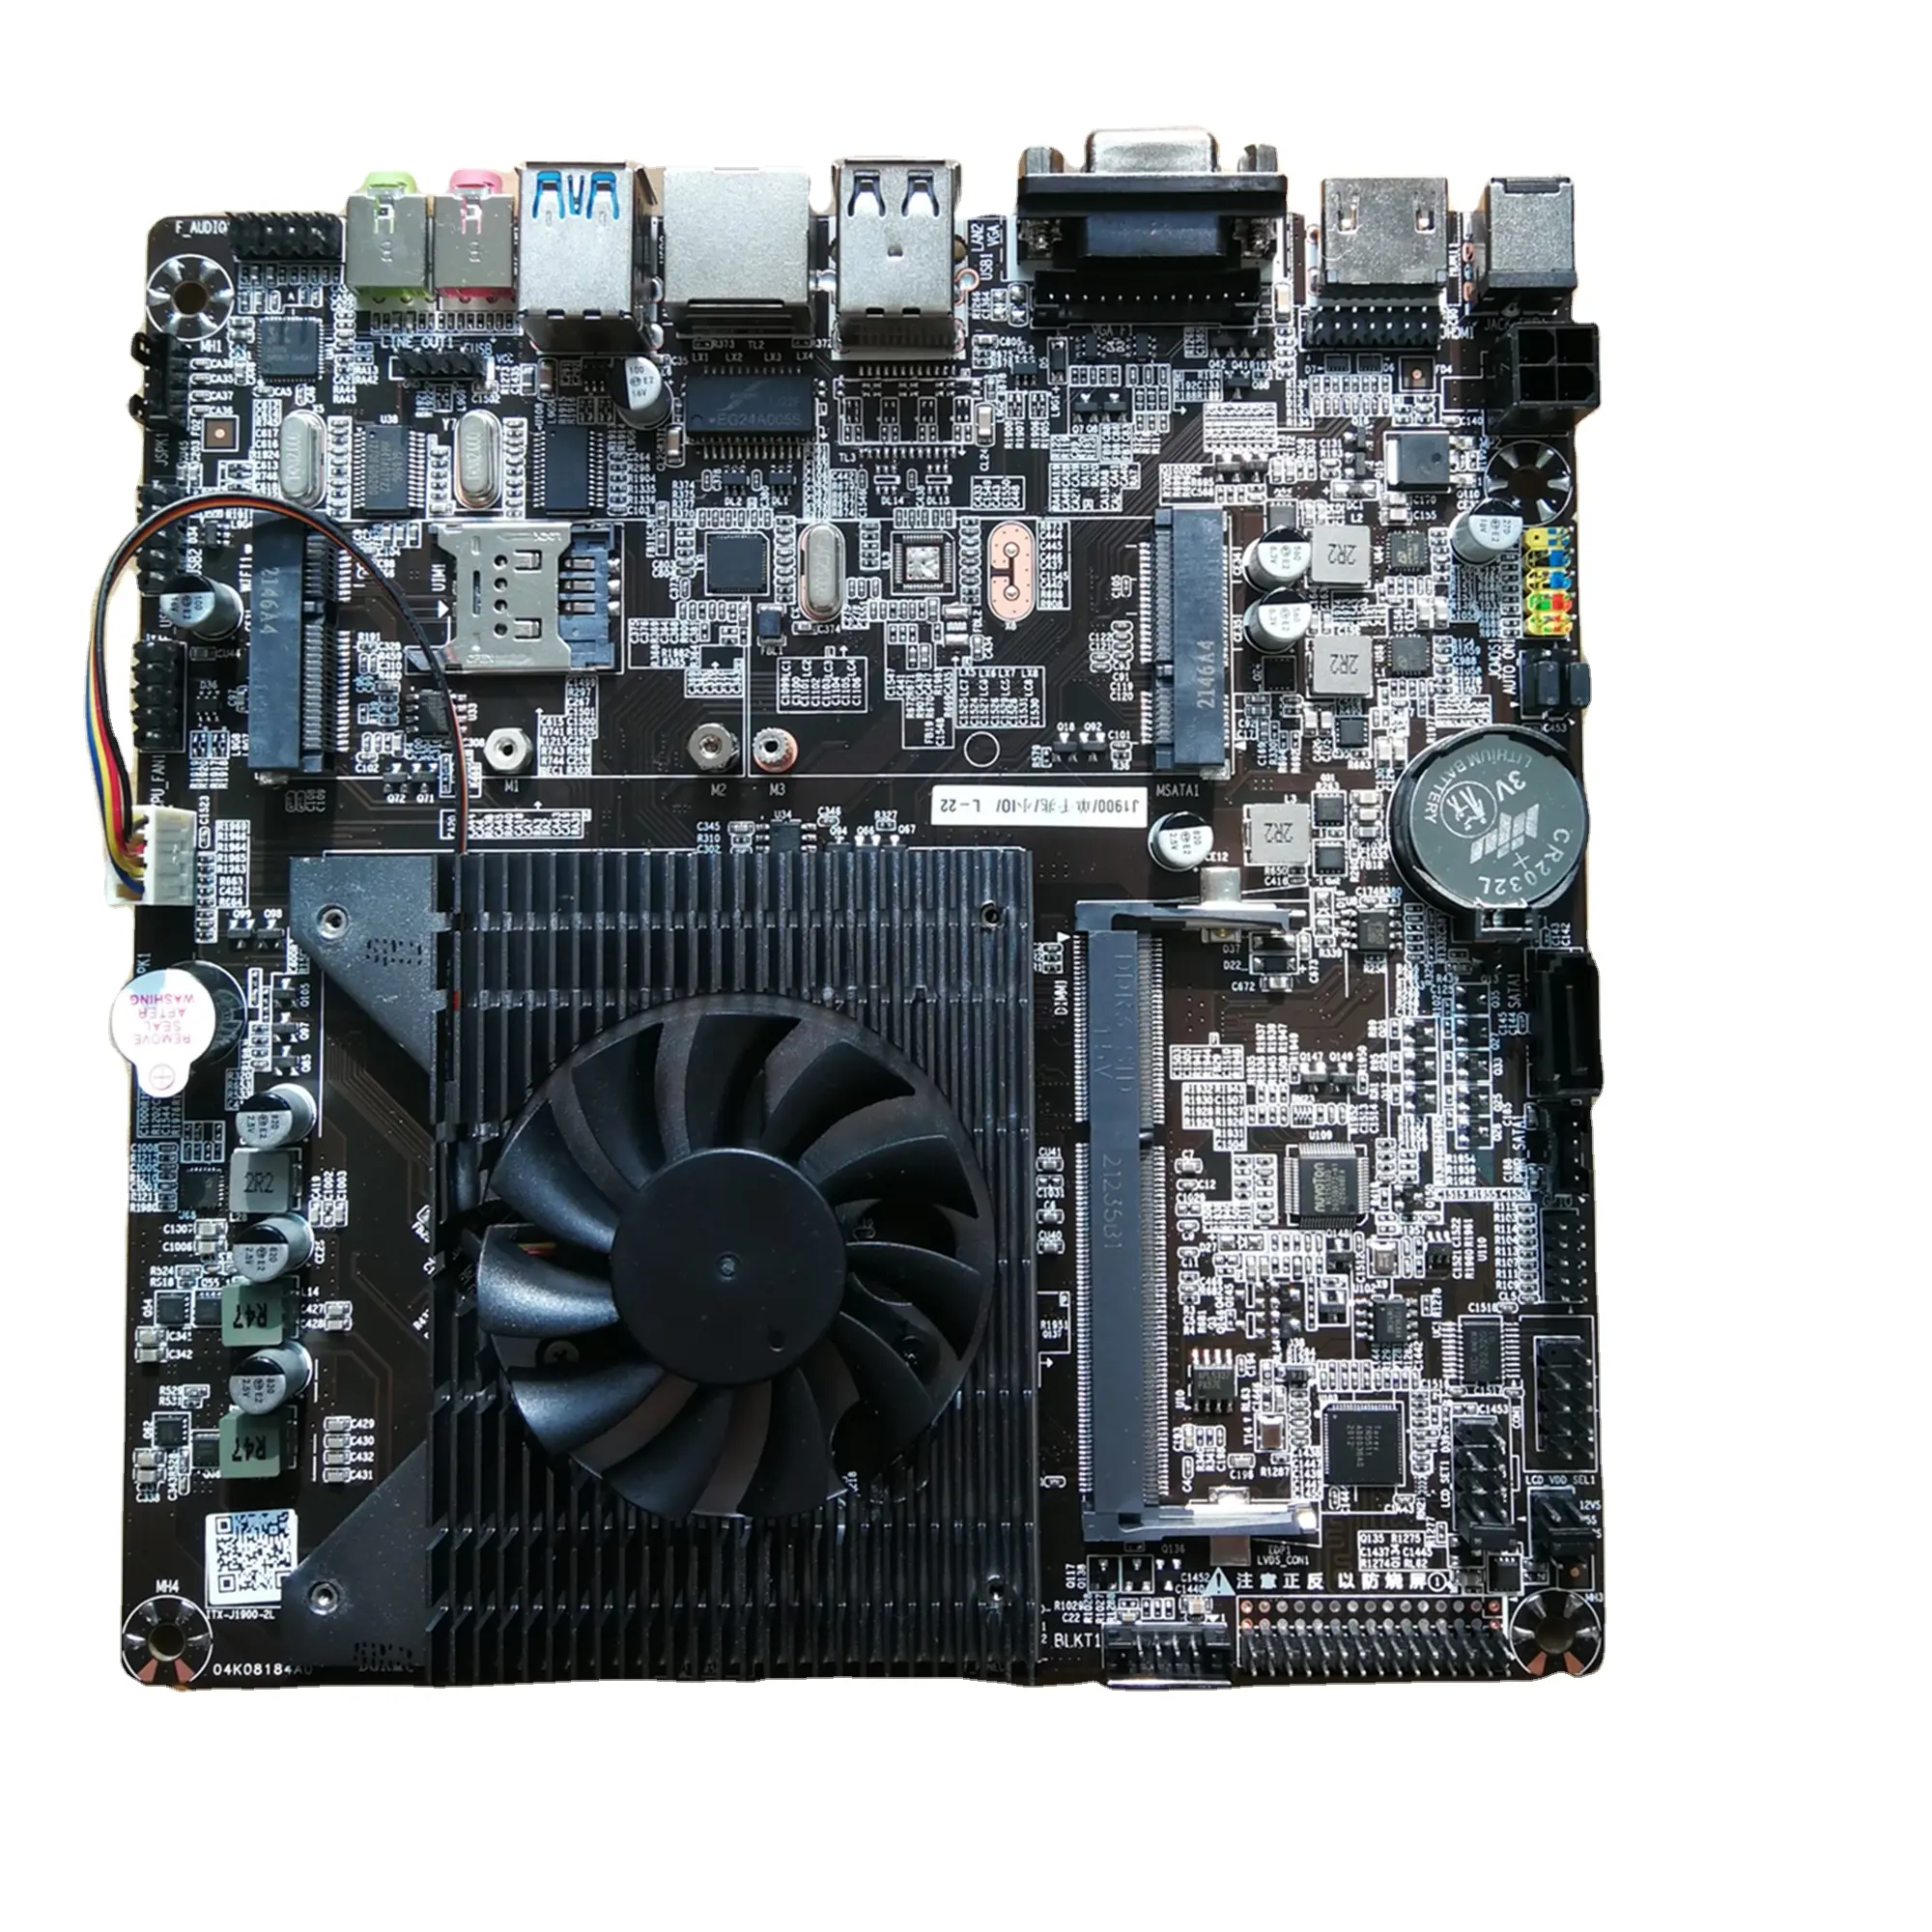 Placa madre Intel J1900 Quad Core CPU Mini ITX integrada para Mini PC con placa base Dual RS232 Dual Lan J1900